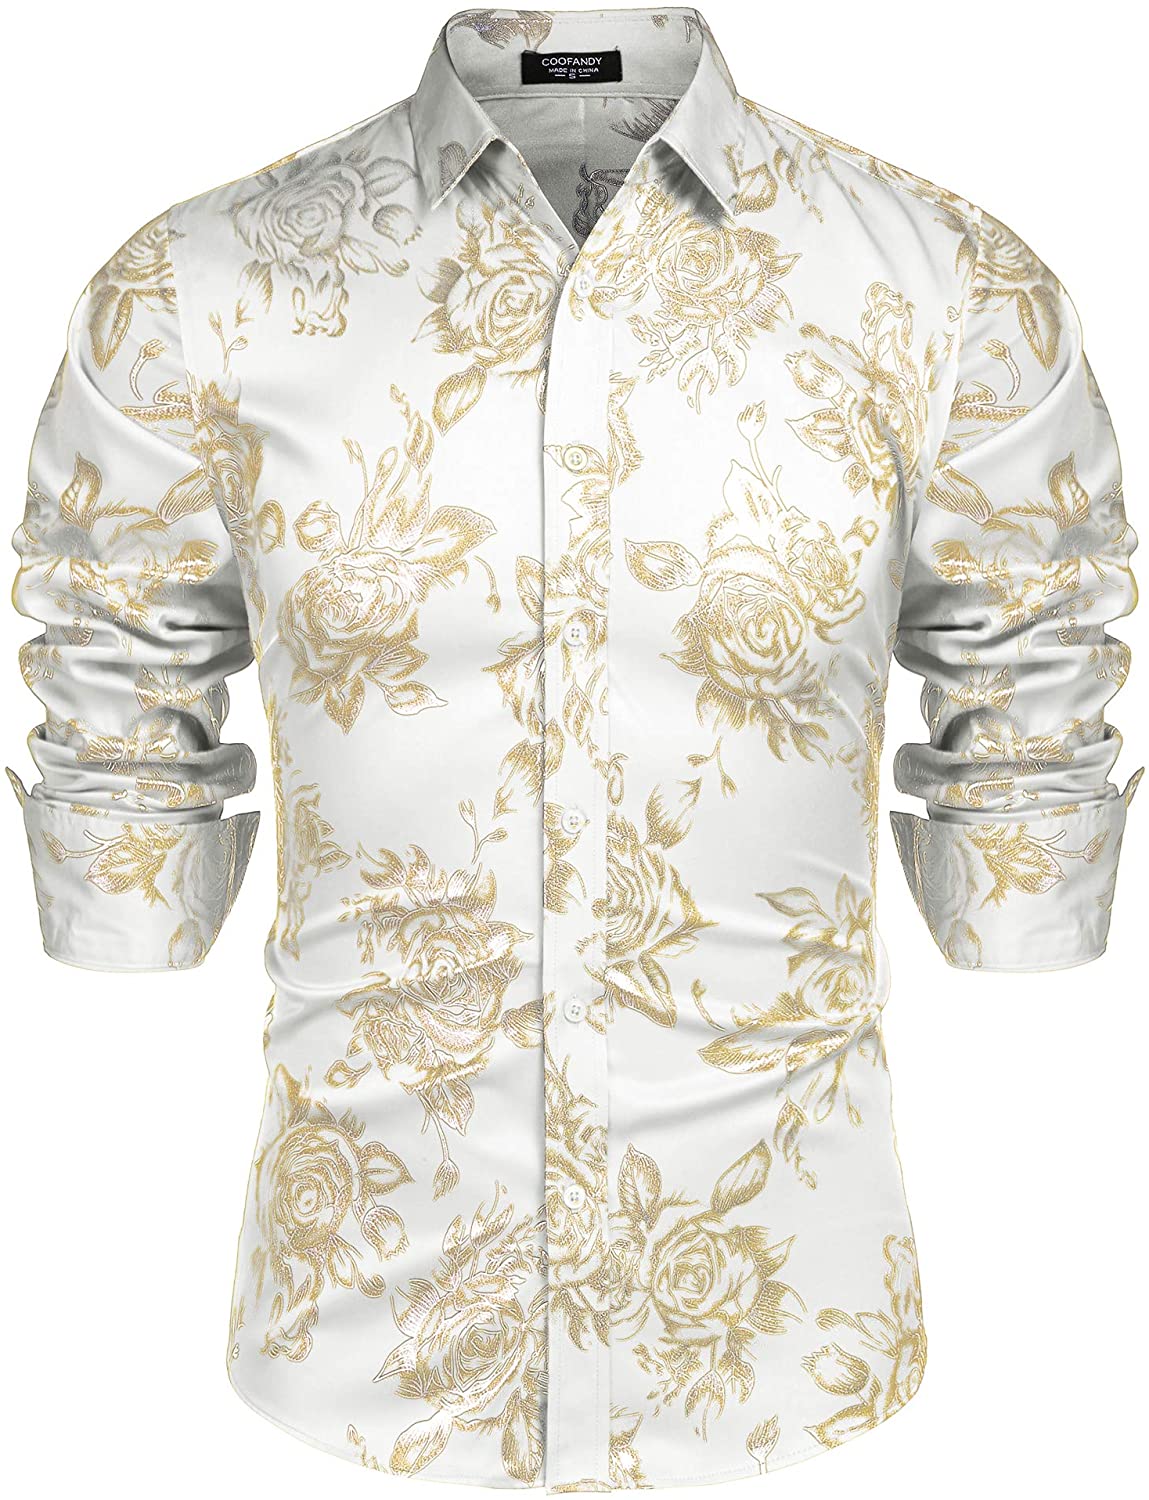 COOFANDY Men's Luxury Dress Shirts Stylish Flower Print Shirt Shiny Button Down Shirt